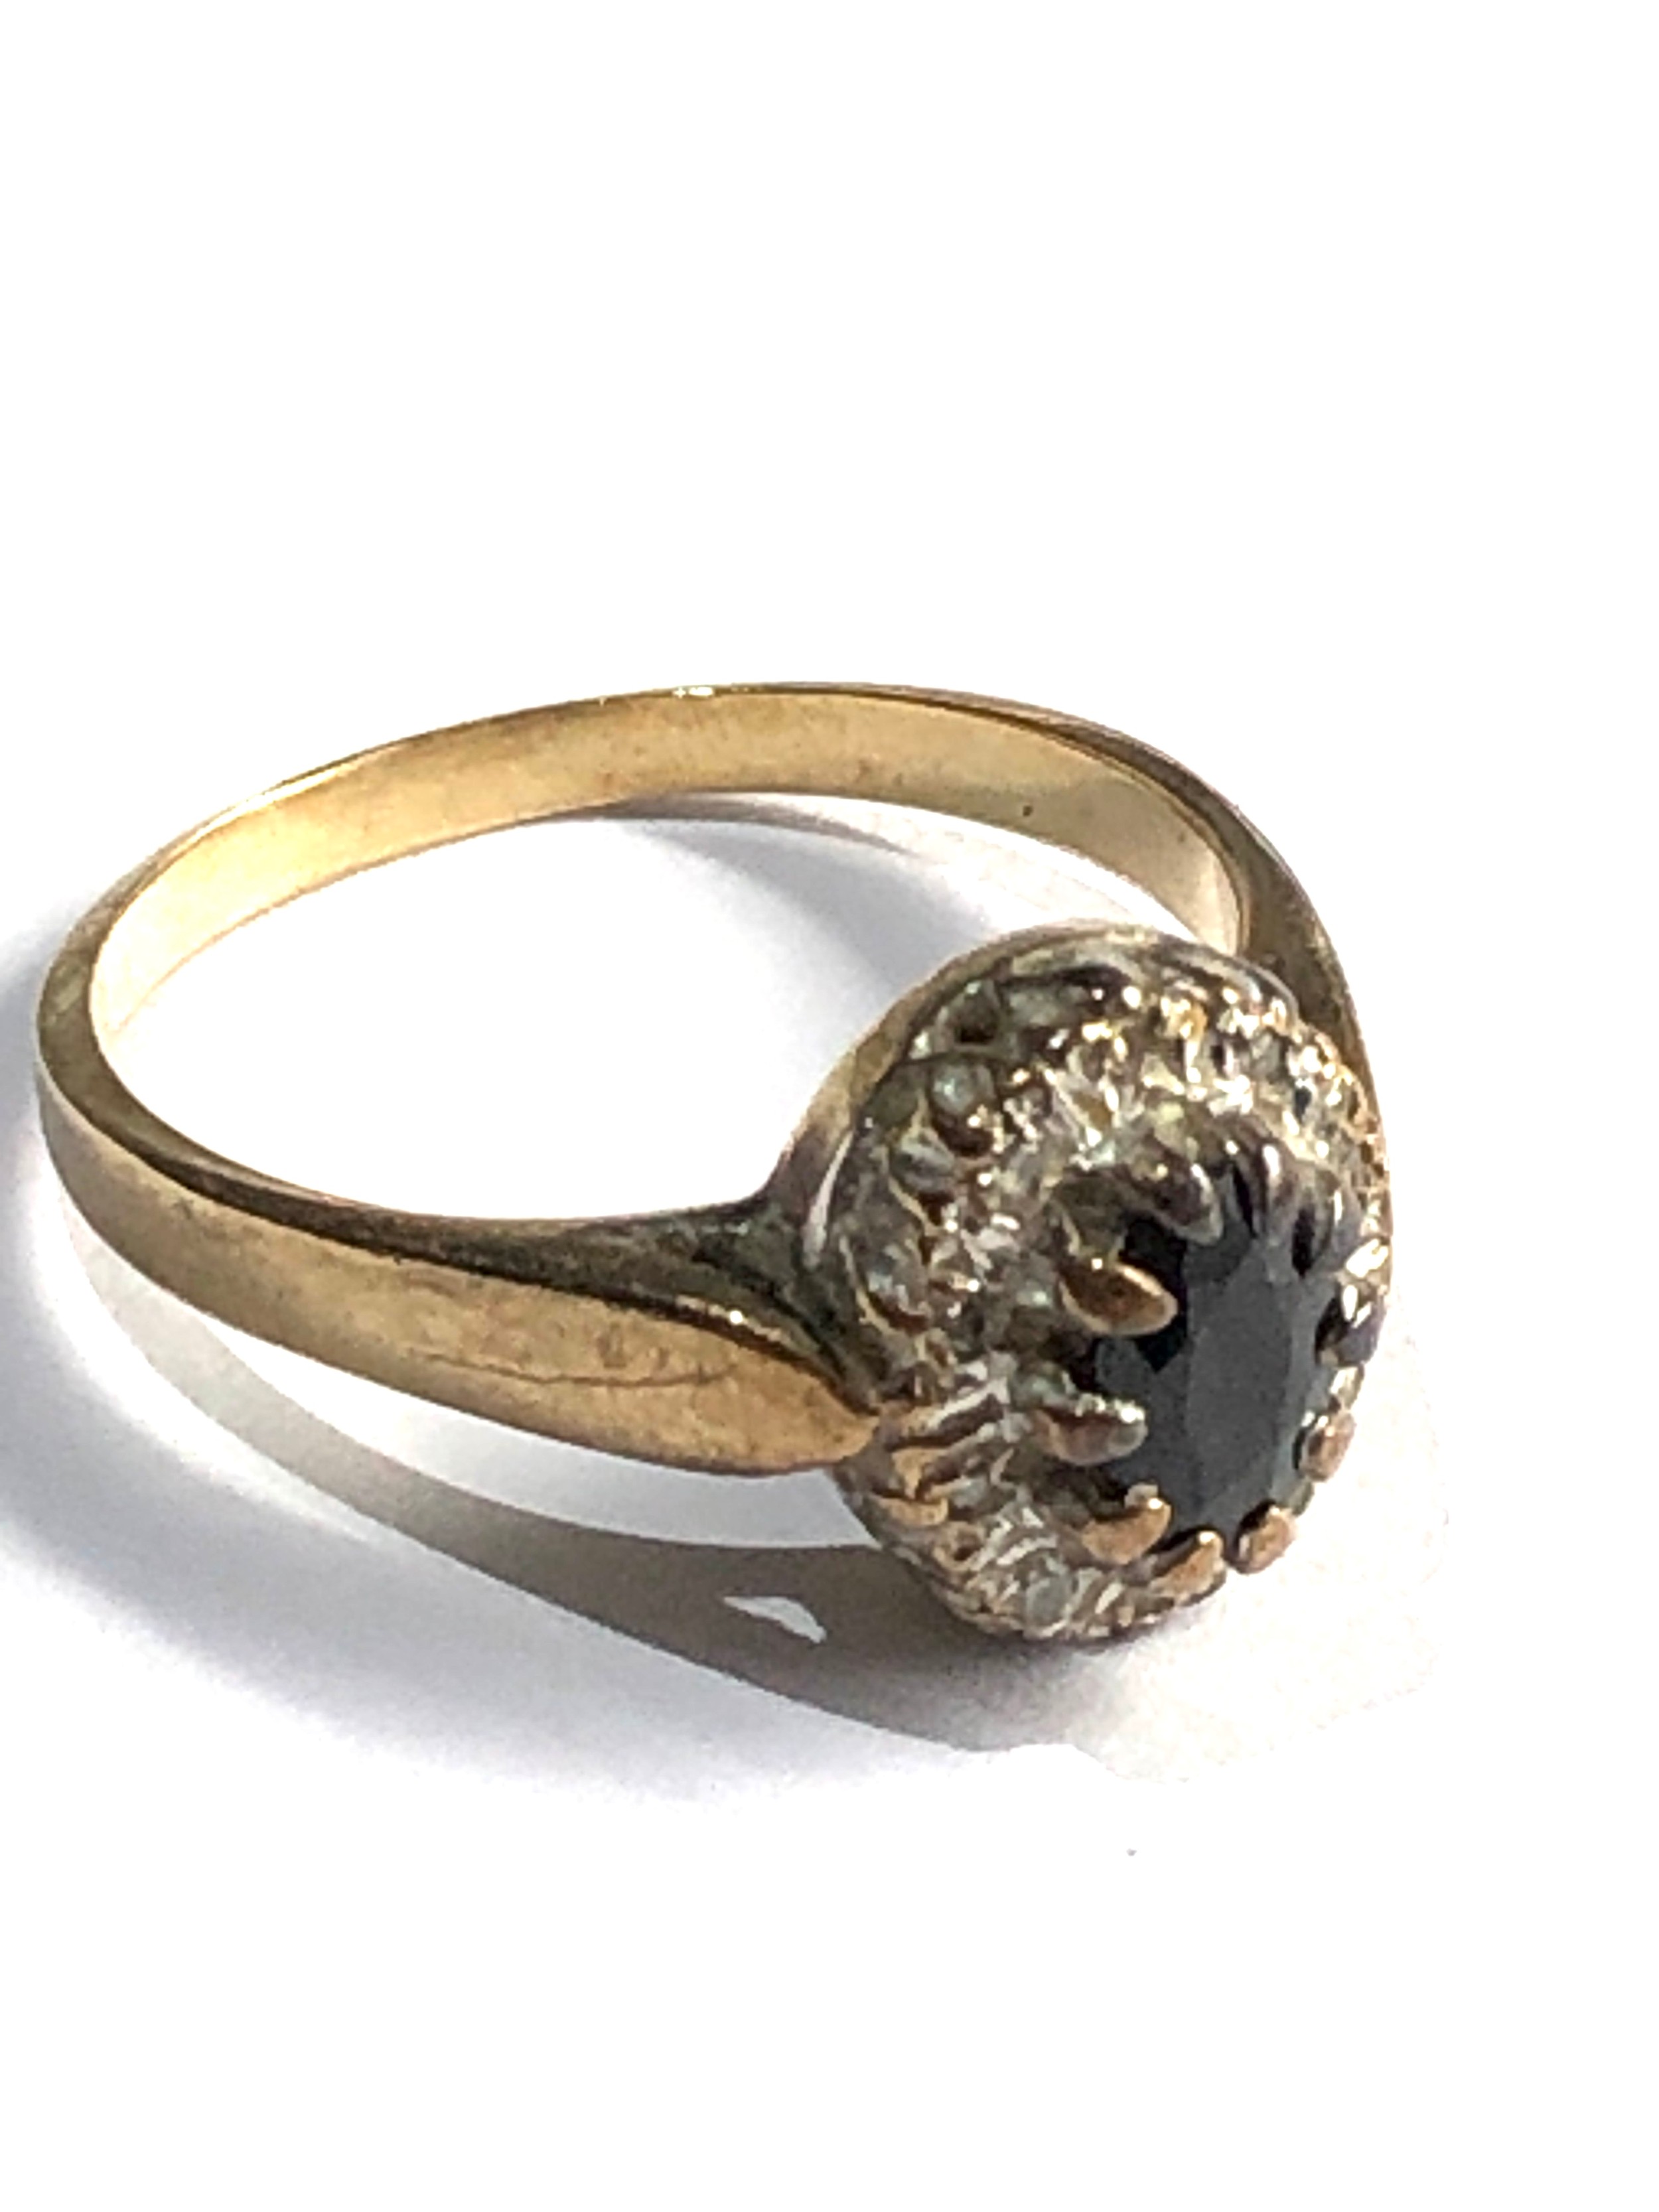 9ct gold sapphire & diamond ring weight 2.7g - Image 2 of 3